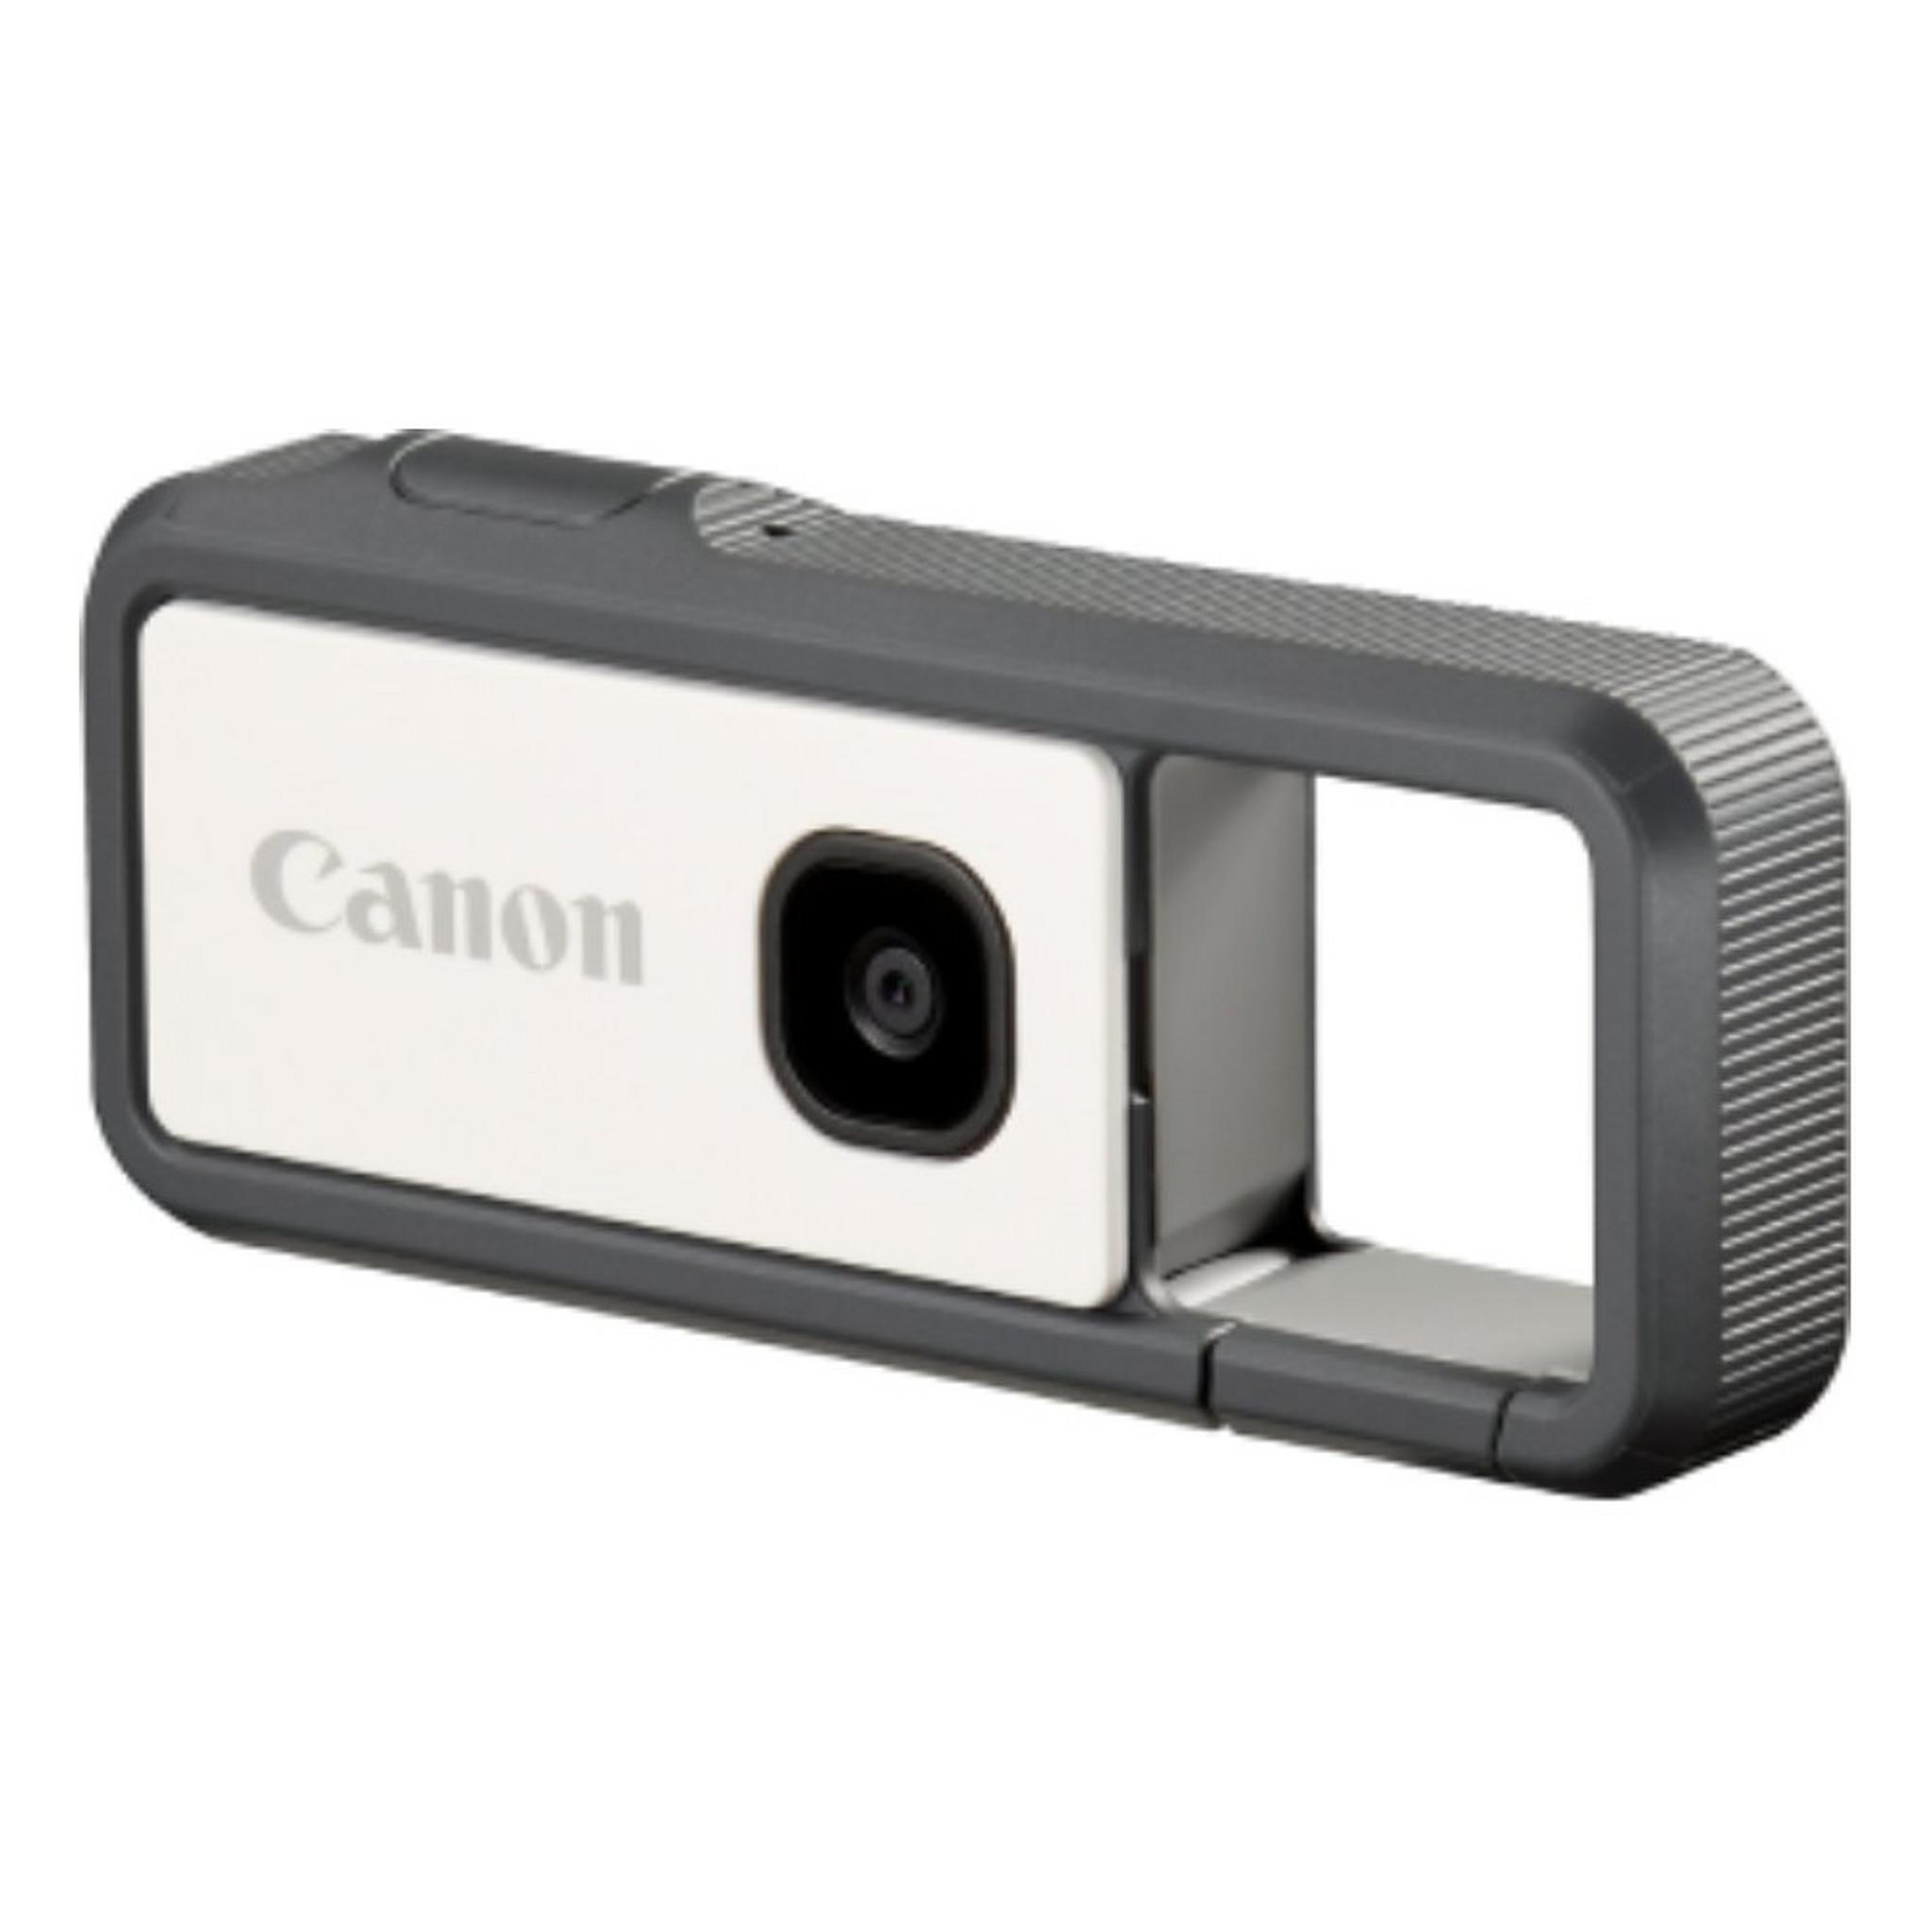 Canon IVY REC Digital Camera -  Grey Stone